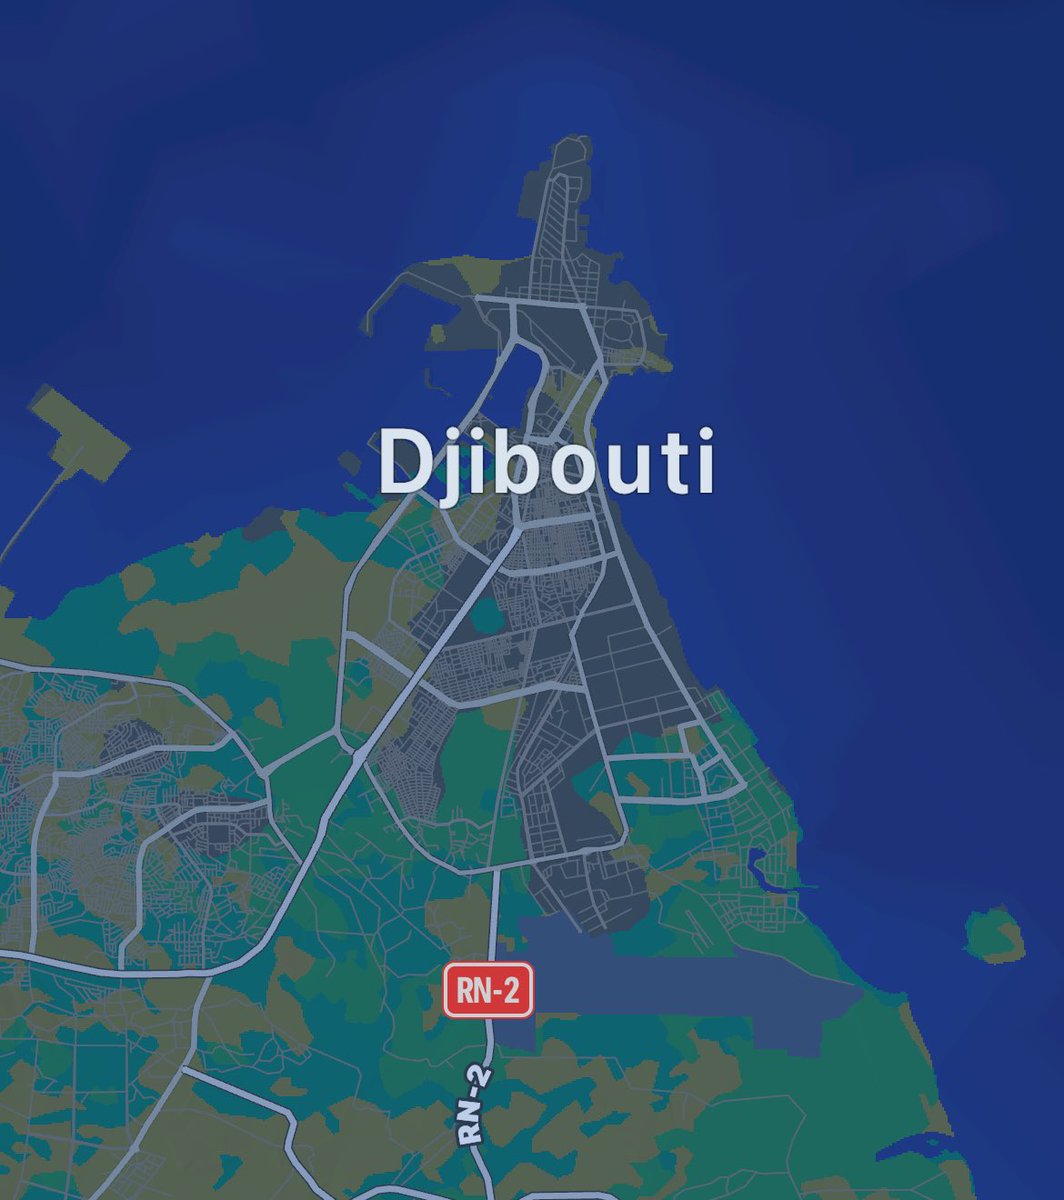 Lemme see those pics of Djibouti.